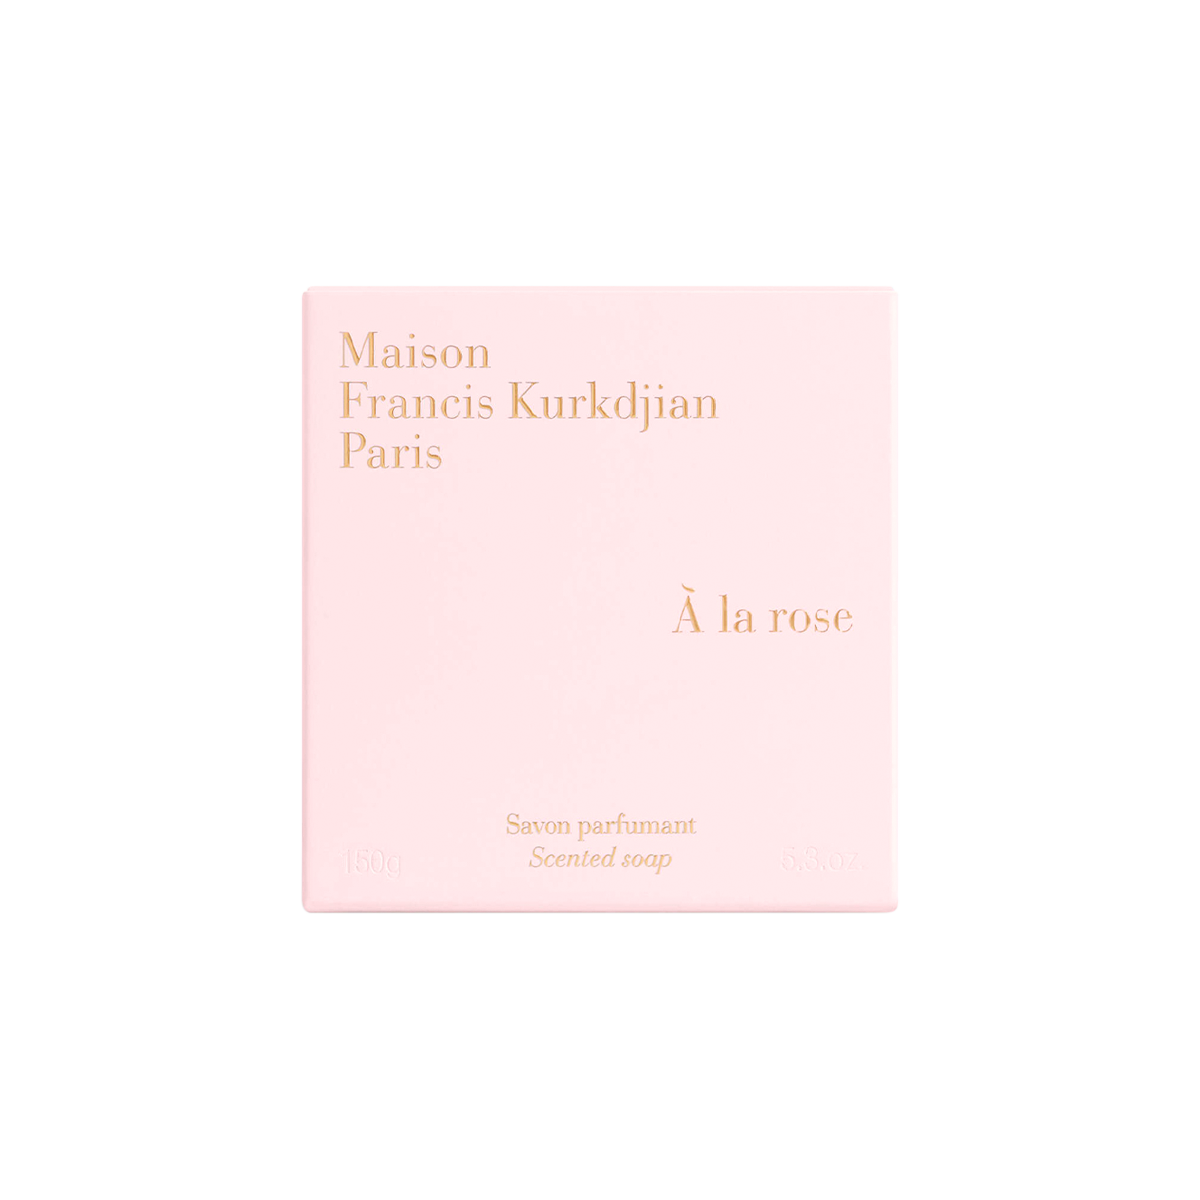 Maison Francis Kurkdjian - A la rose Scented soap